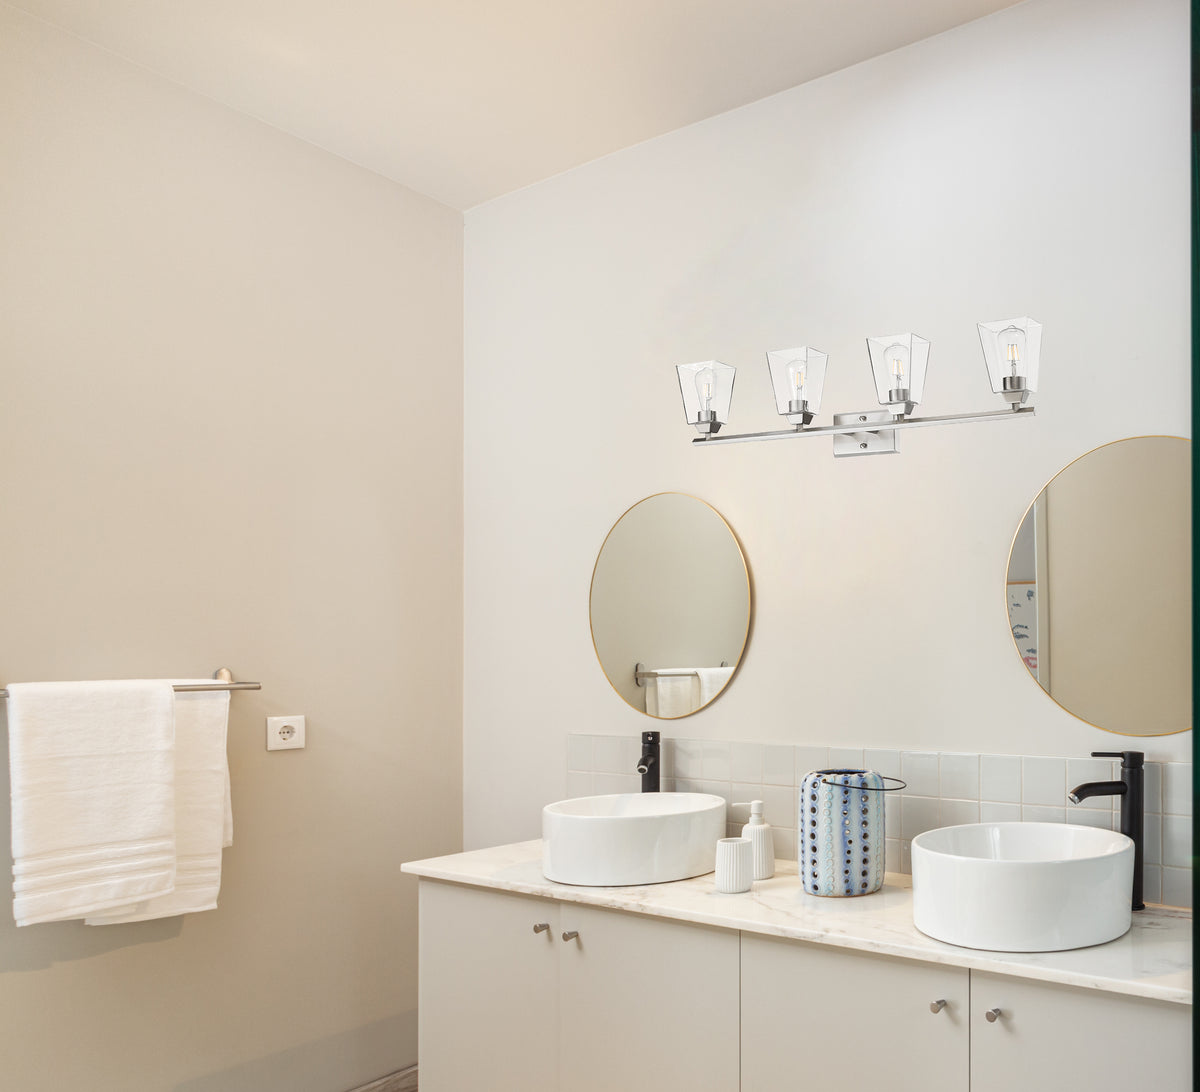 Nickel bathroom vanity light bar with 4 light over mirror